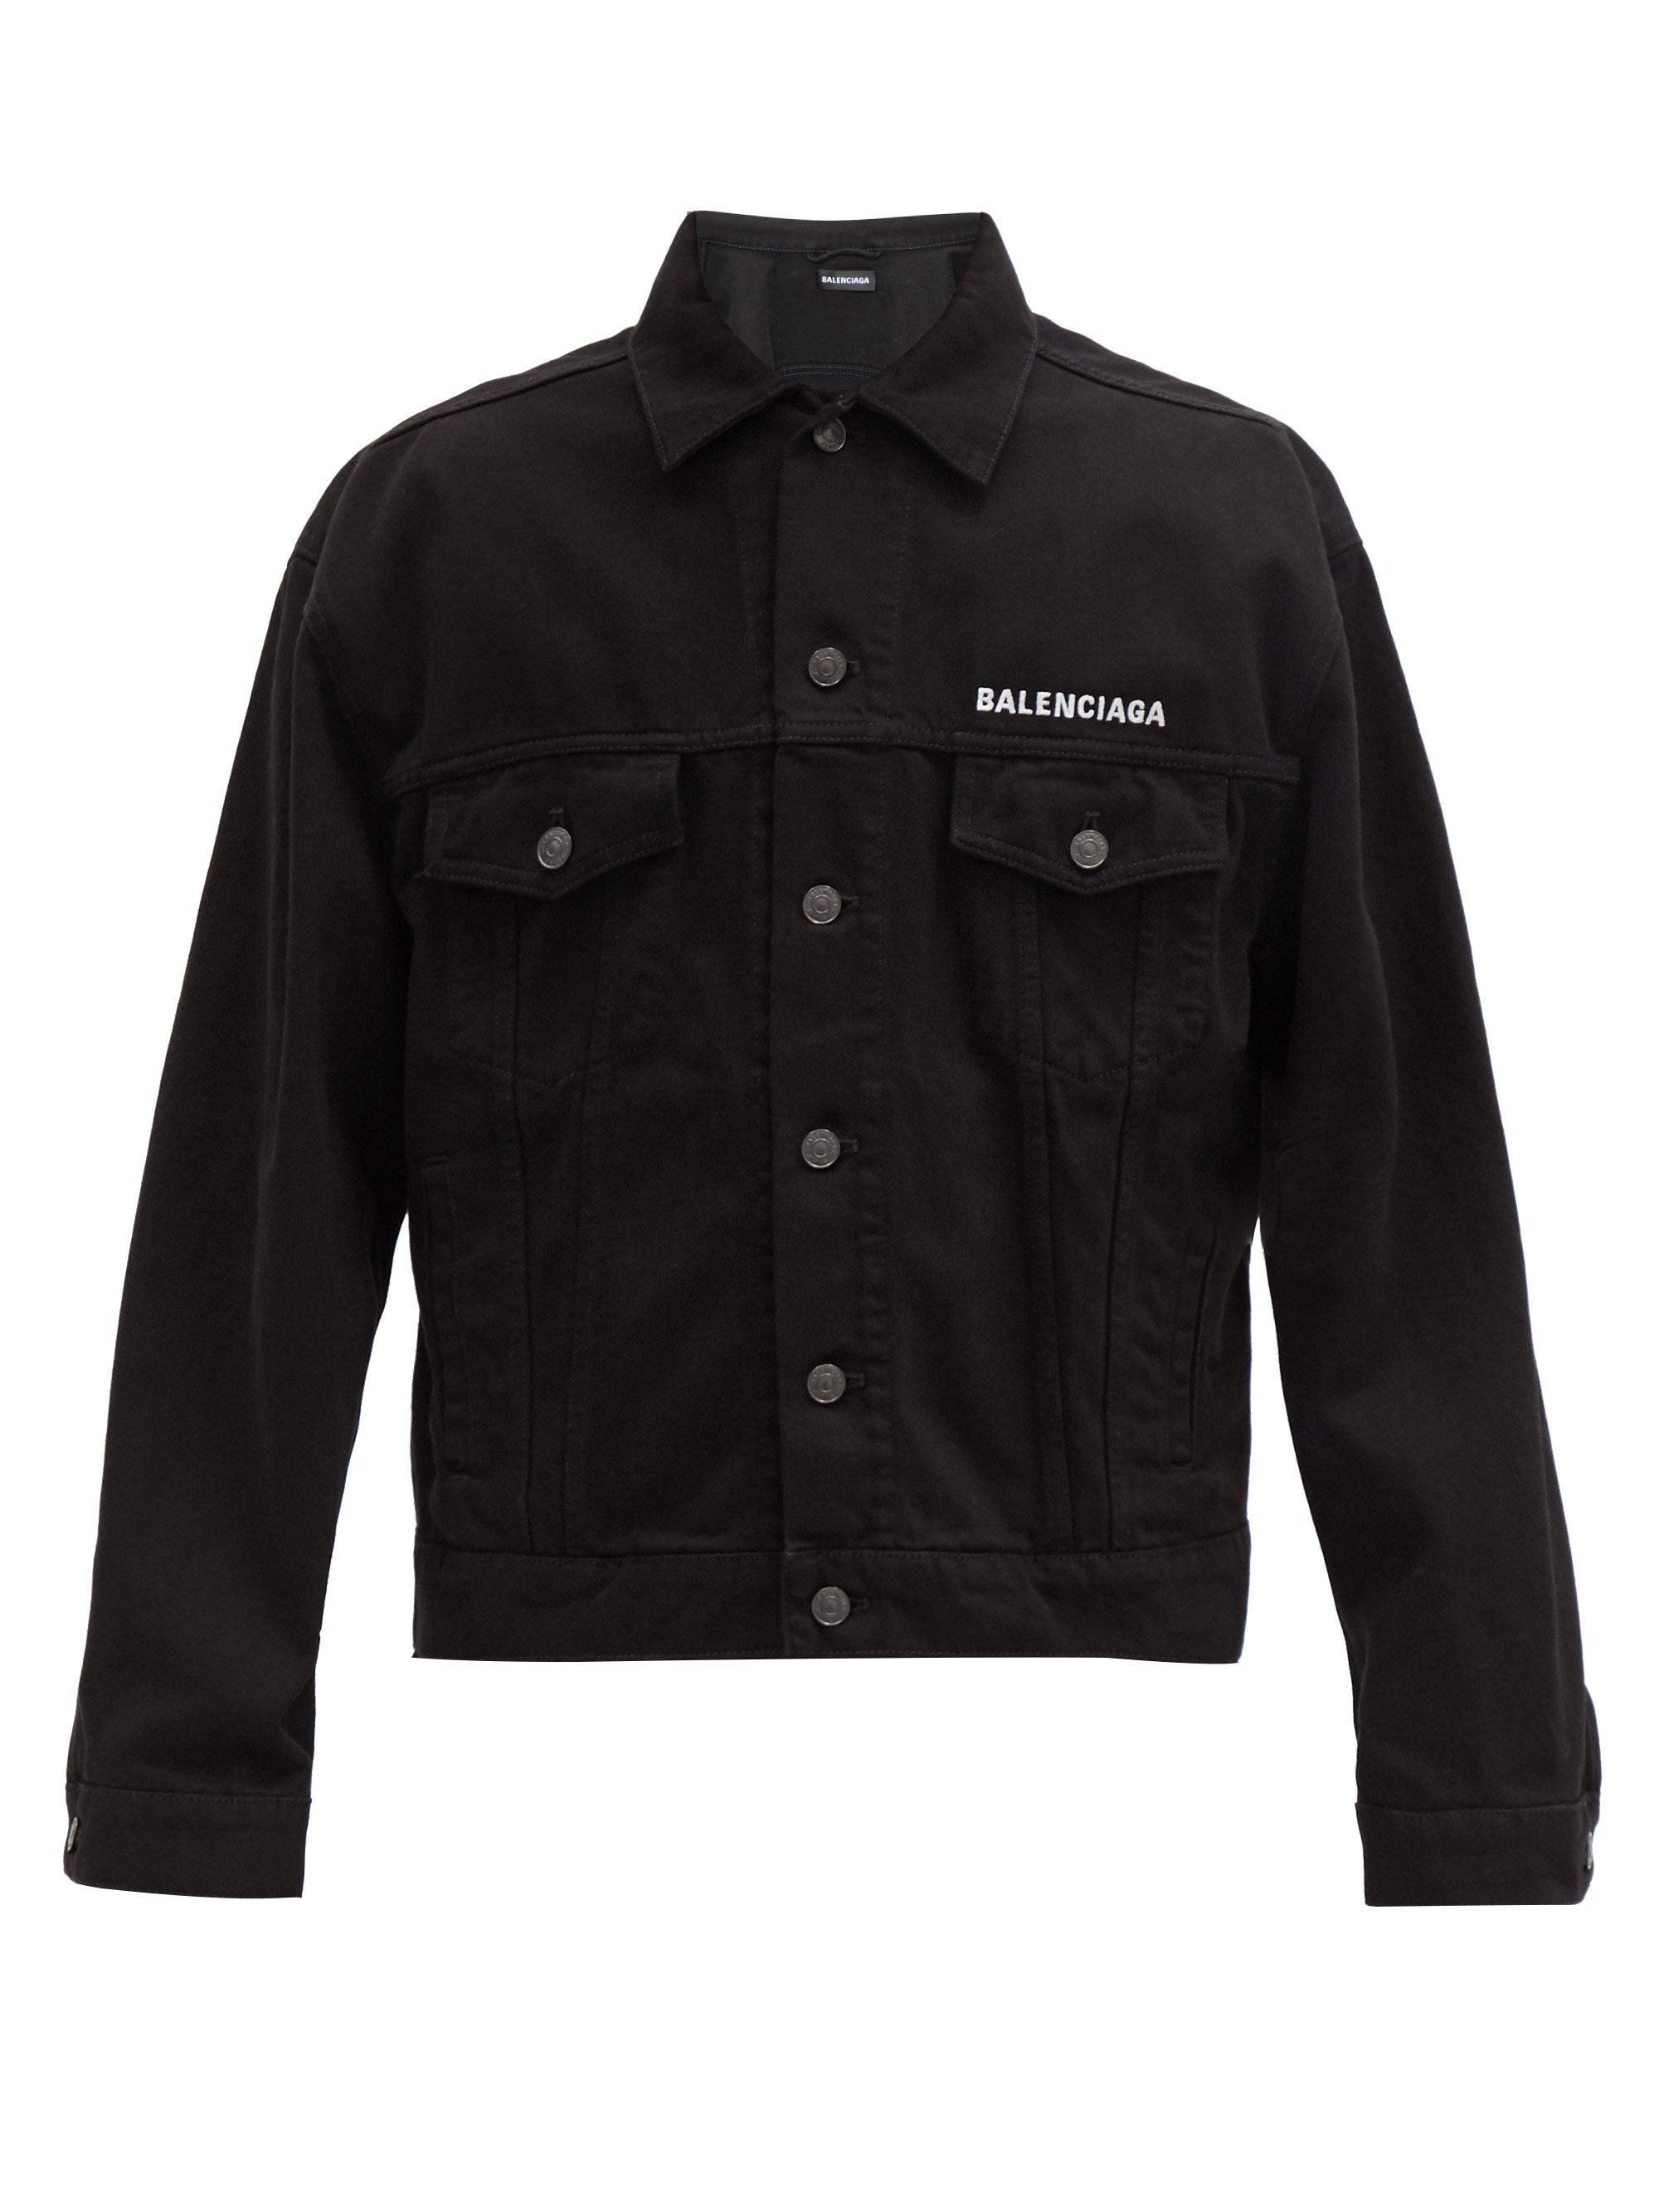 Balenciaga Crew-embroidered Denim Jacket in Black for Men | Lyst